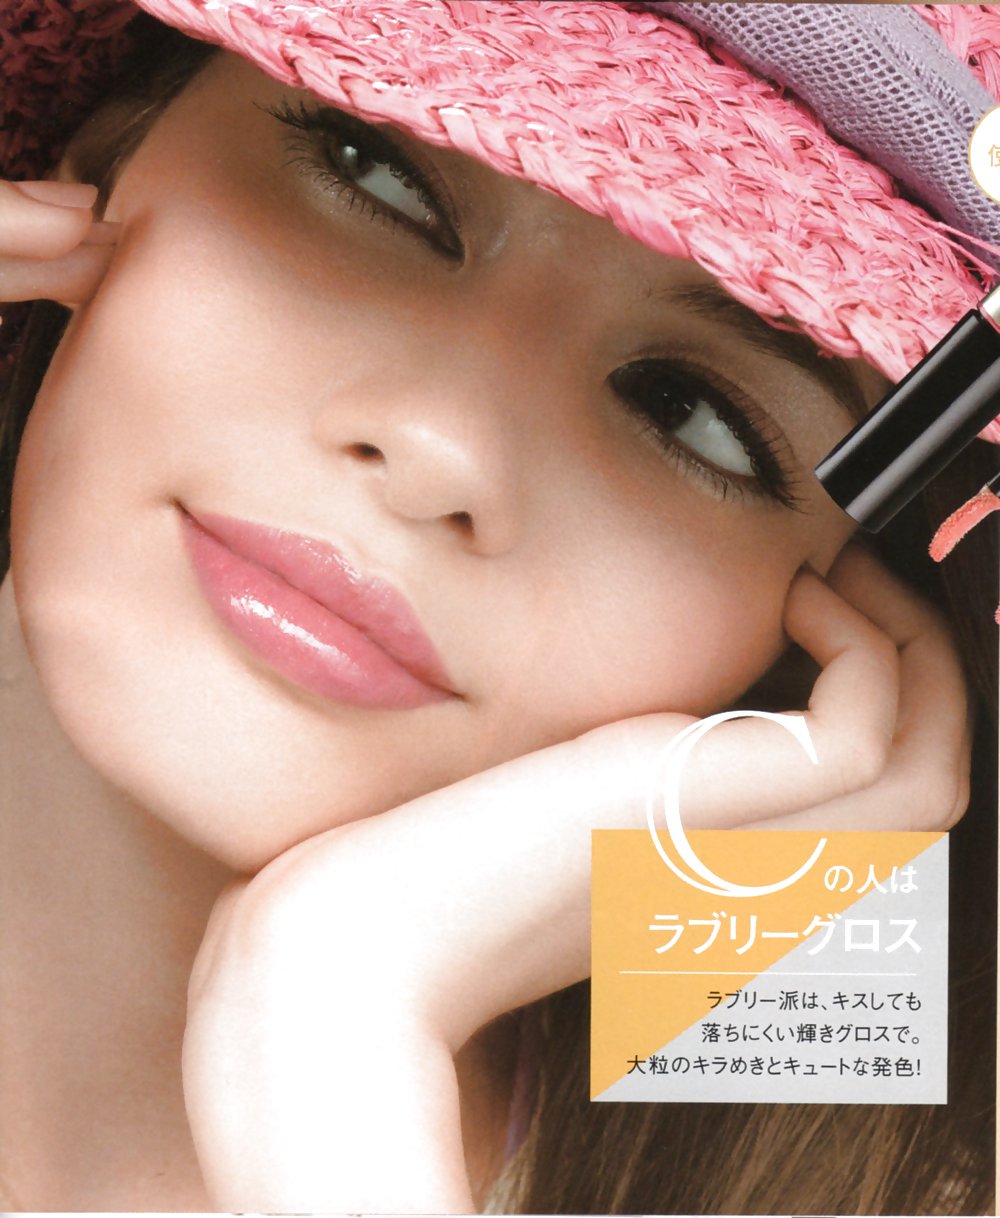 Mujeres sexy de panfletos japoneses (2)
 #3656651